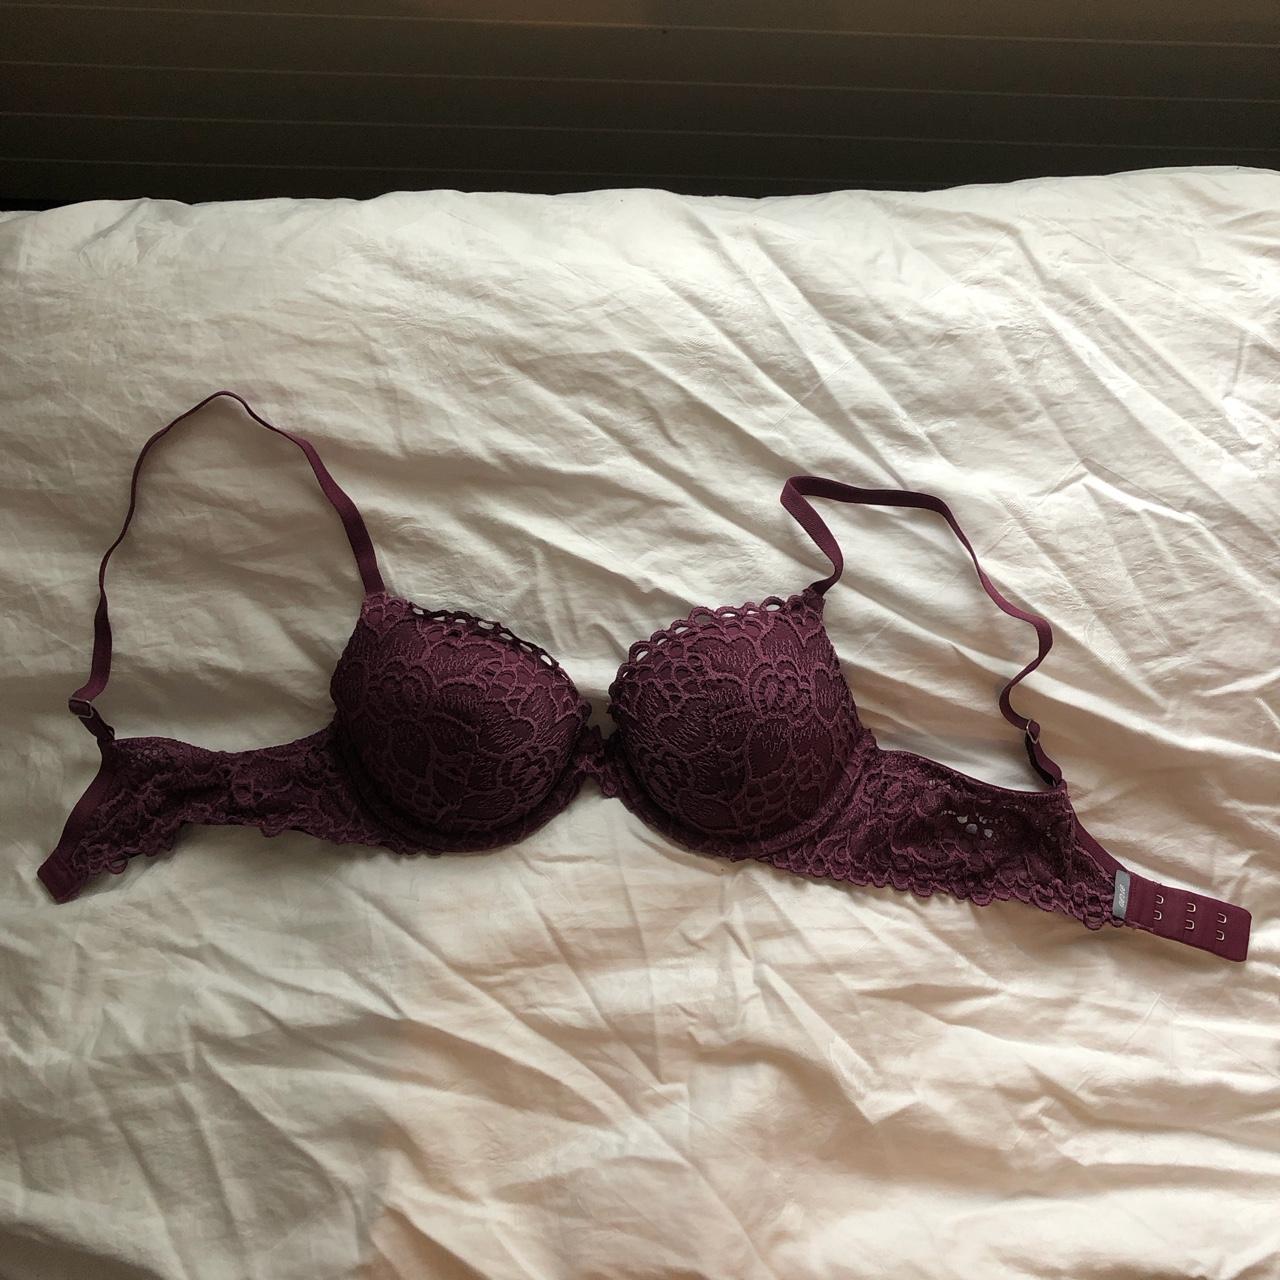 cup size 32C B7 #bh #bra #lingerie - Depop